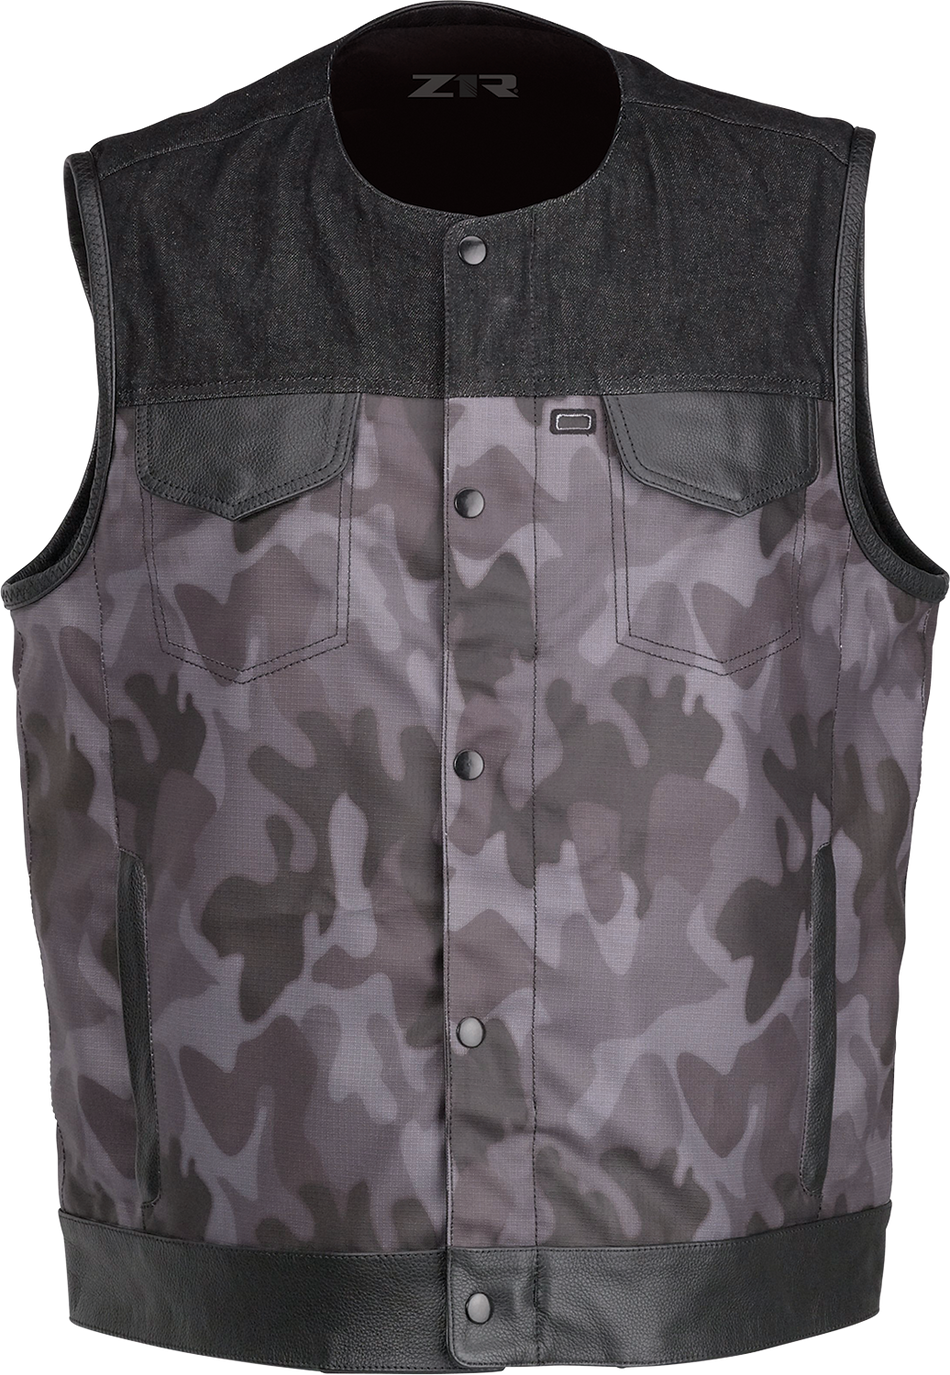 Z1R Nightfire Camo Vest - Black/Gray - XL 2830-0627